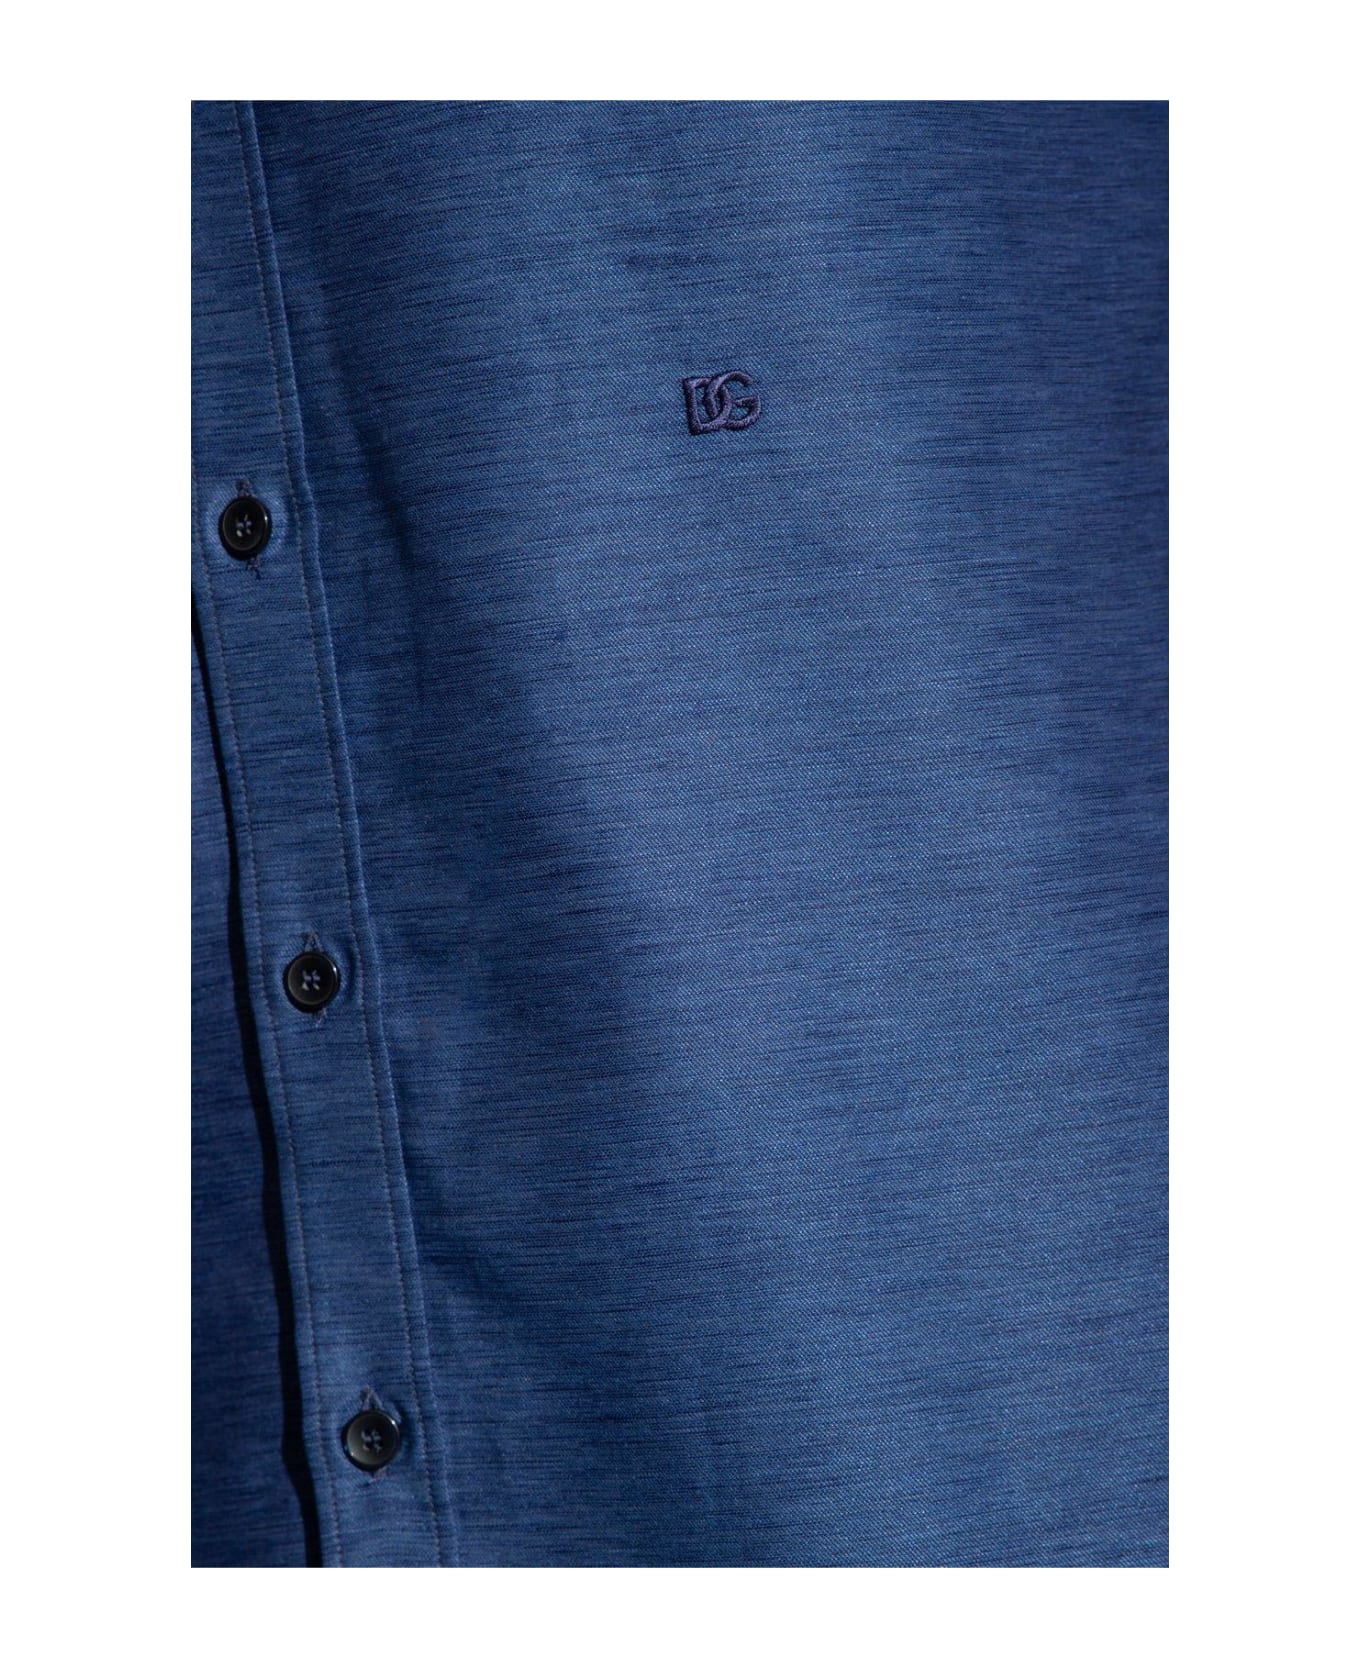 Dolce & Gabbana Logo Embroidered Buttoned Shirt - Blu シャツ